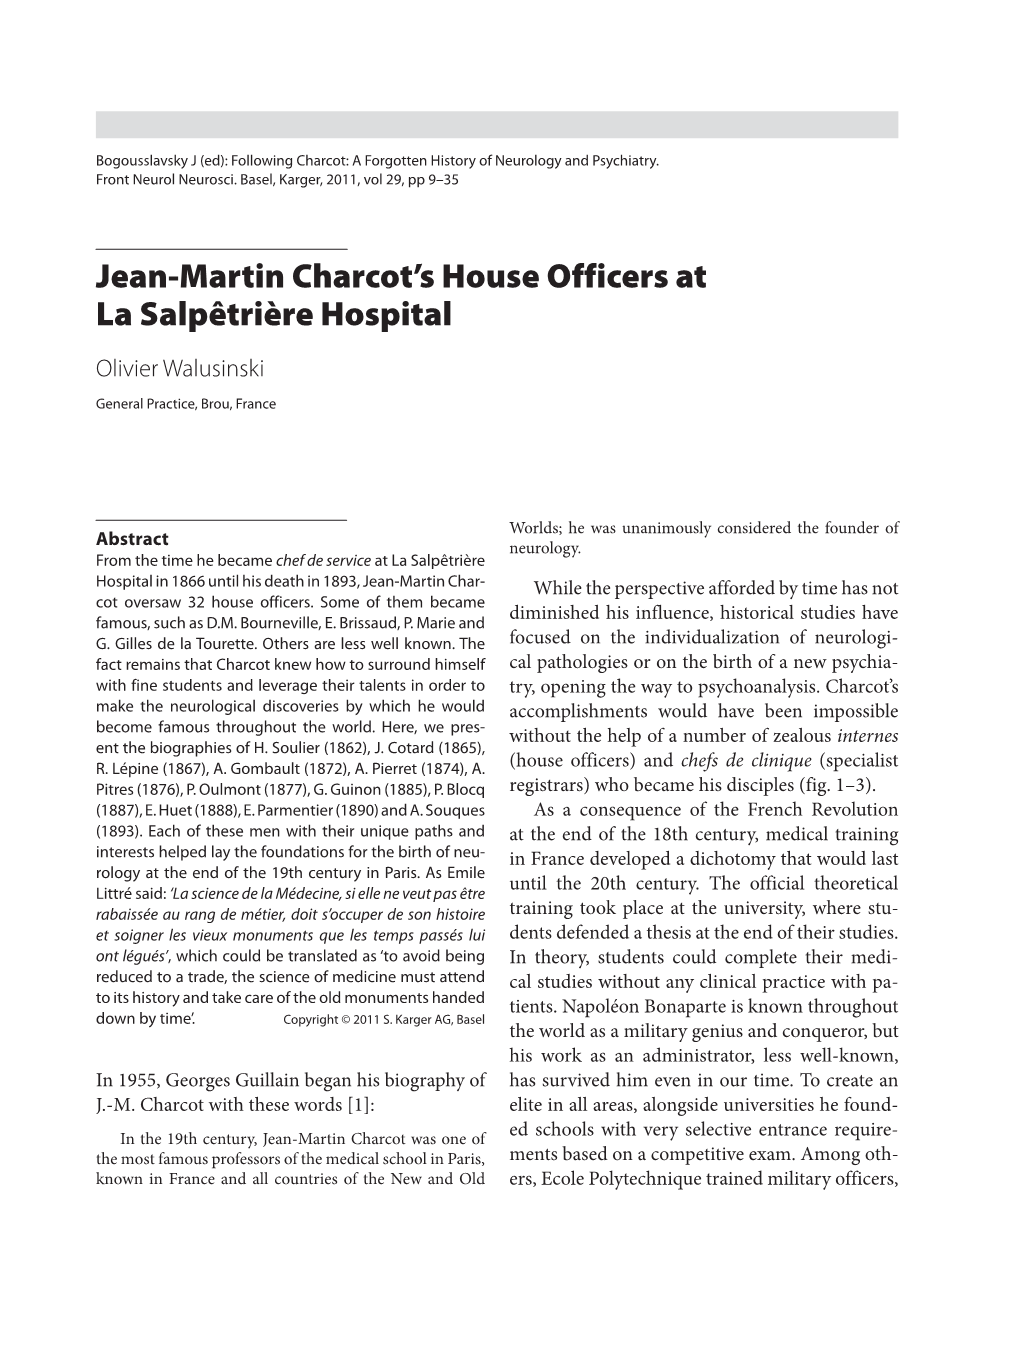 Jean-Martin Charcot's House Officers at La Salpêtrière Hospital